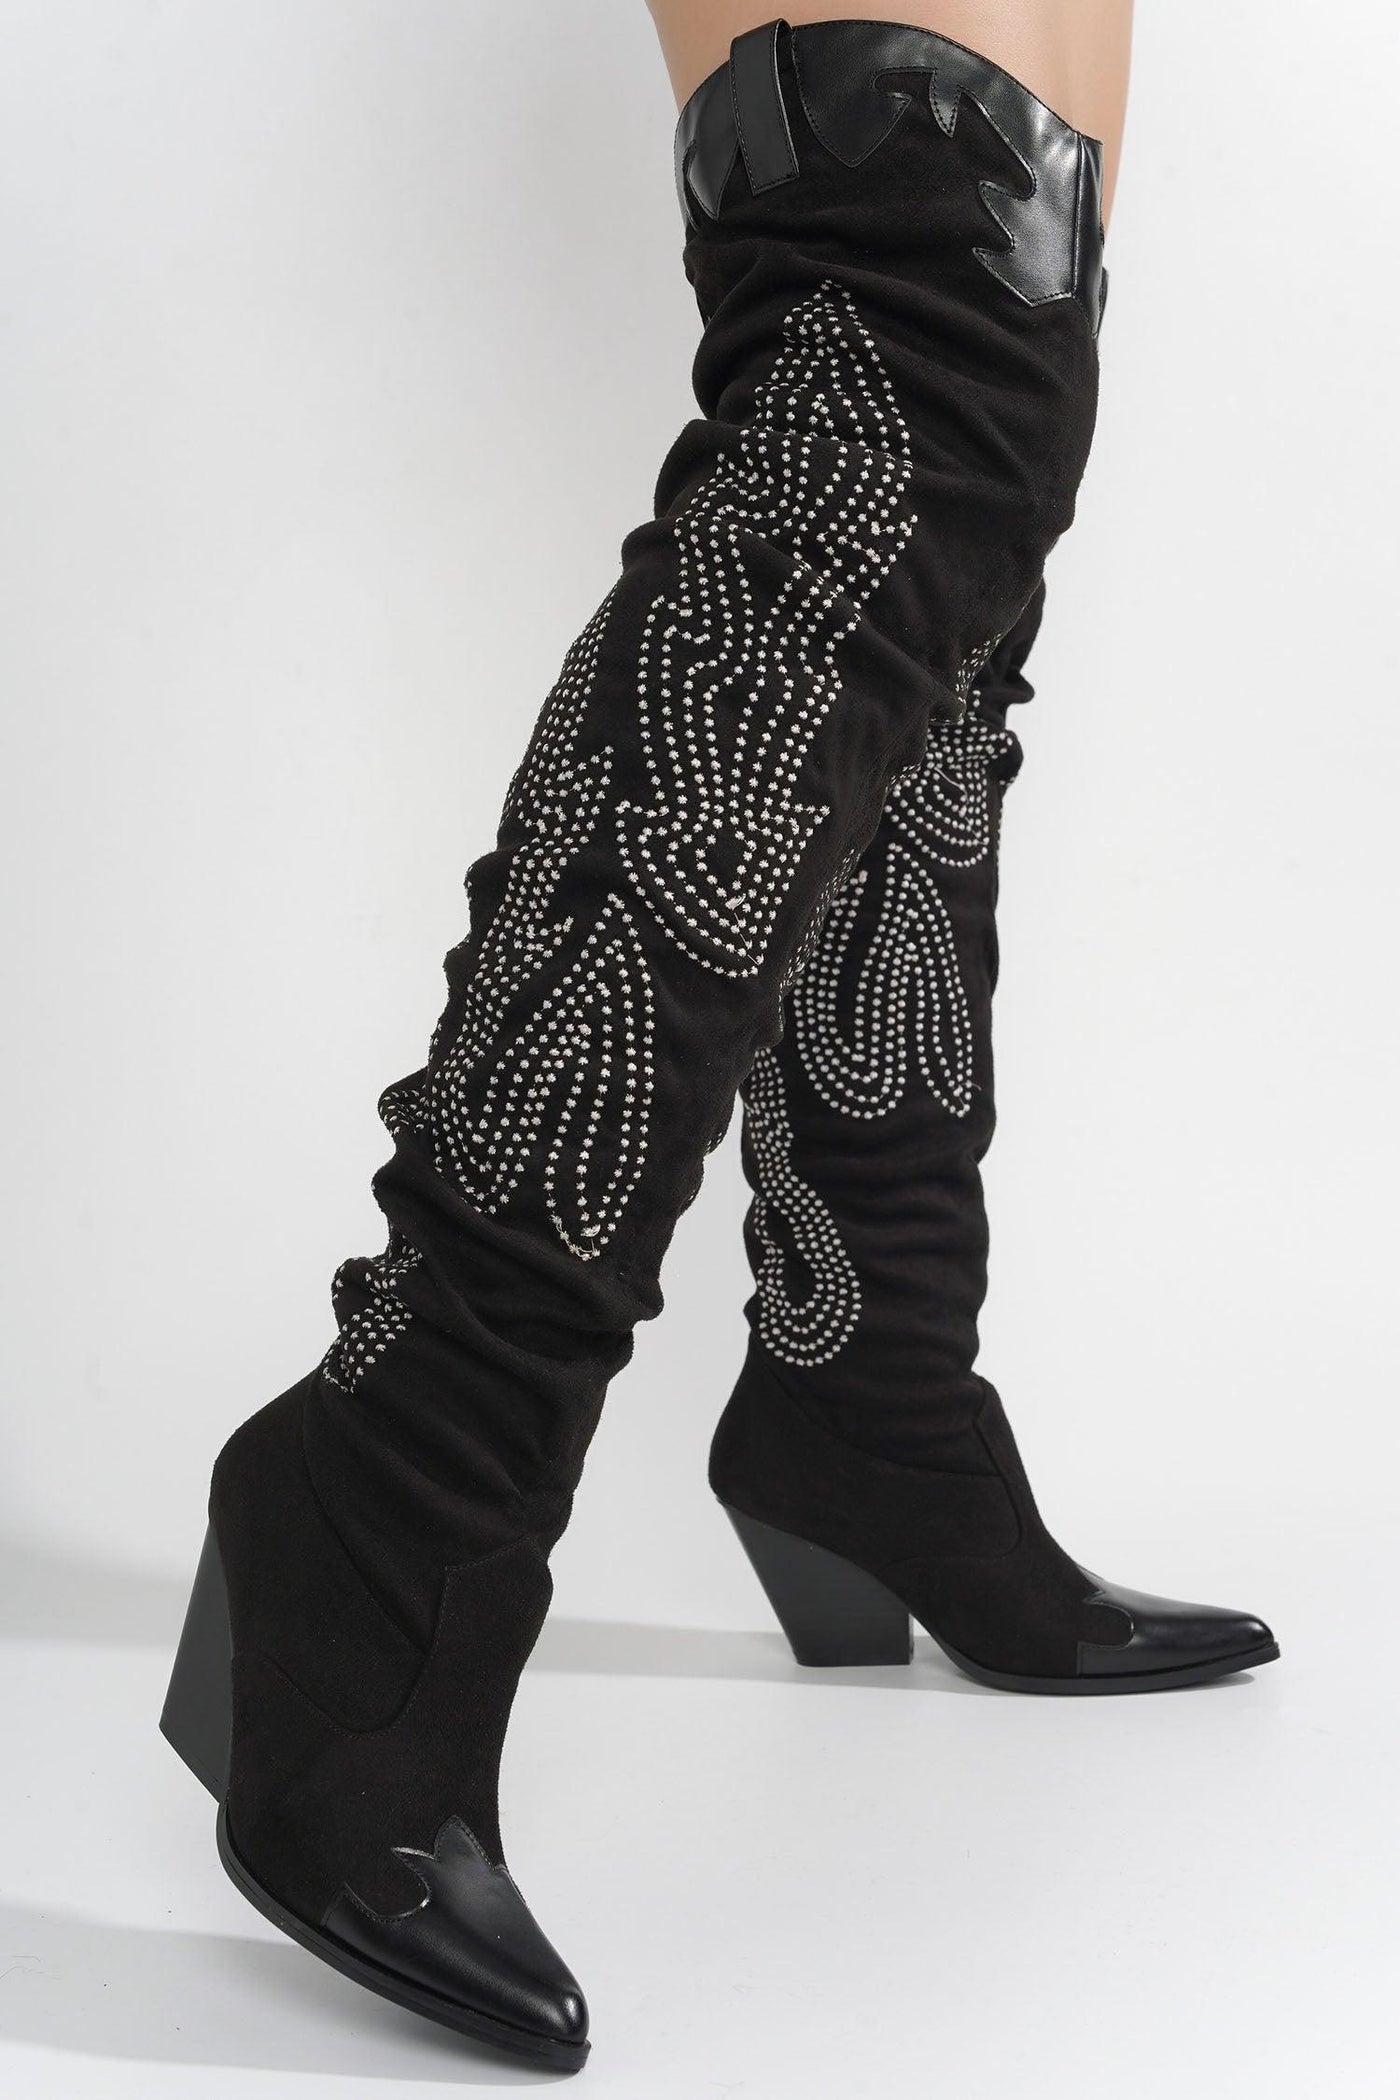 ICONA - BLACK Thigh High Boots